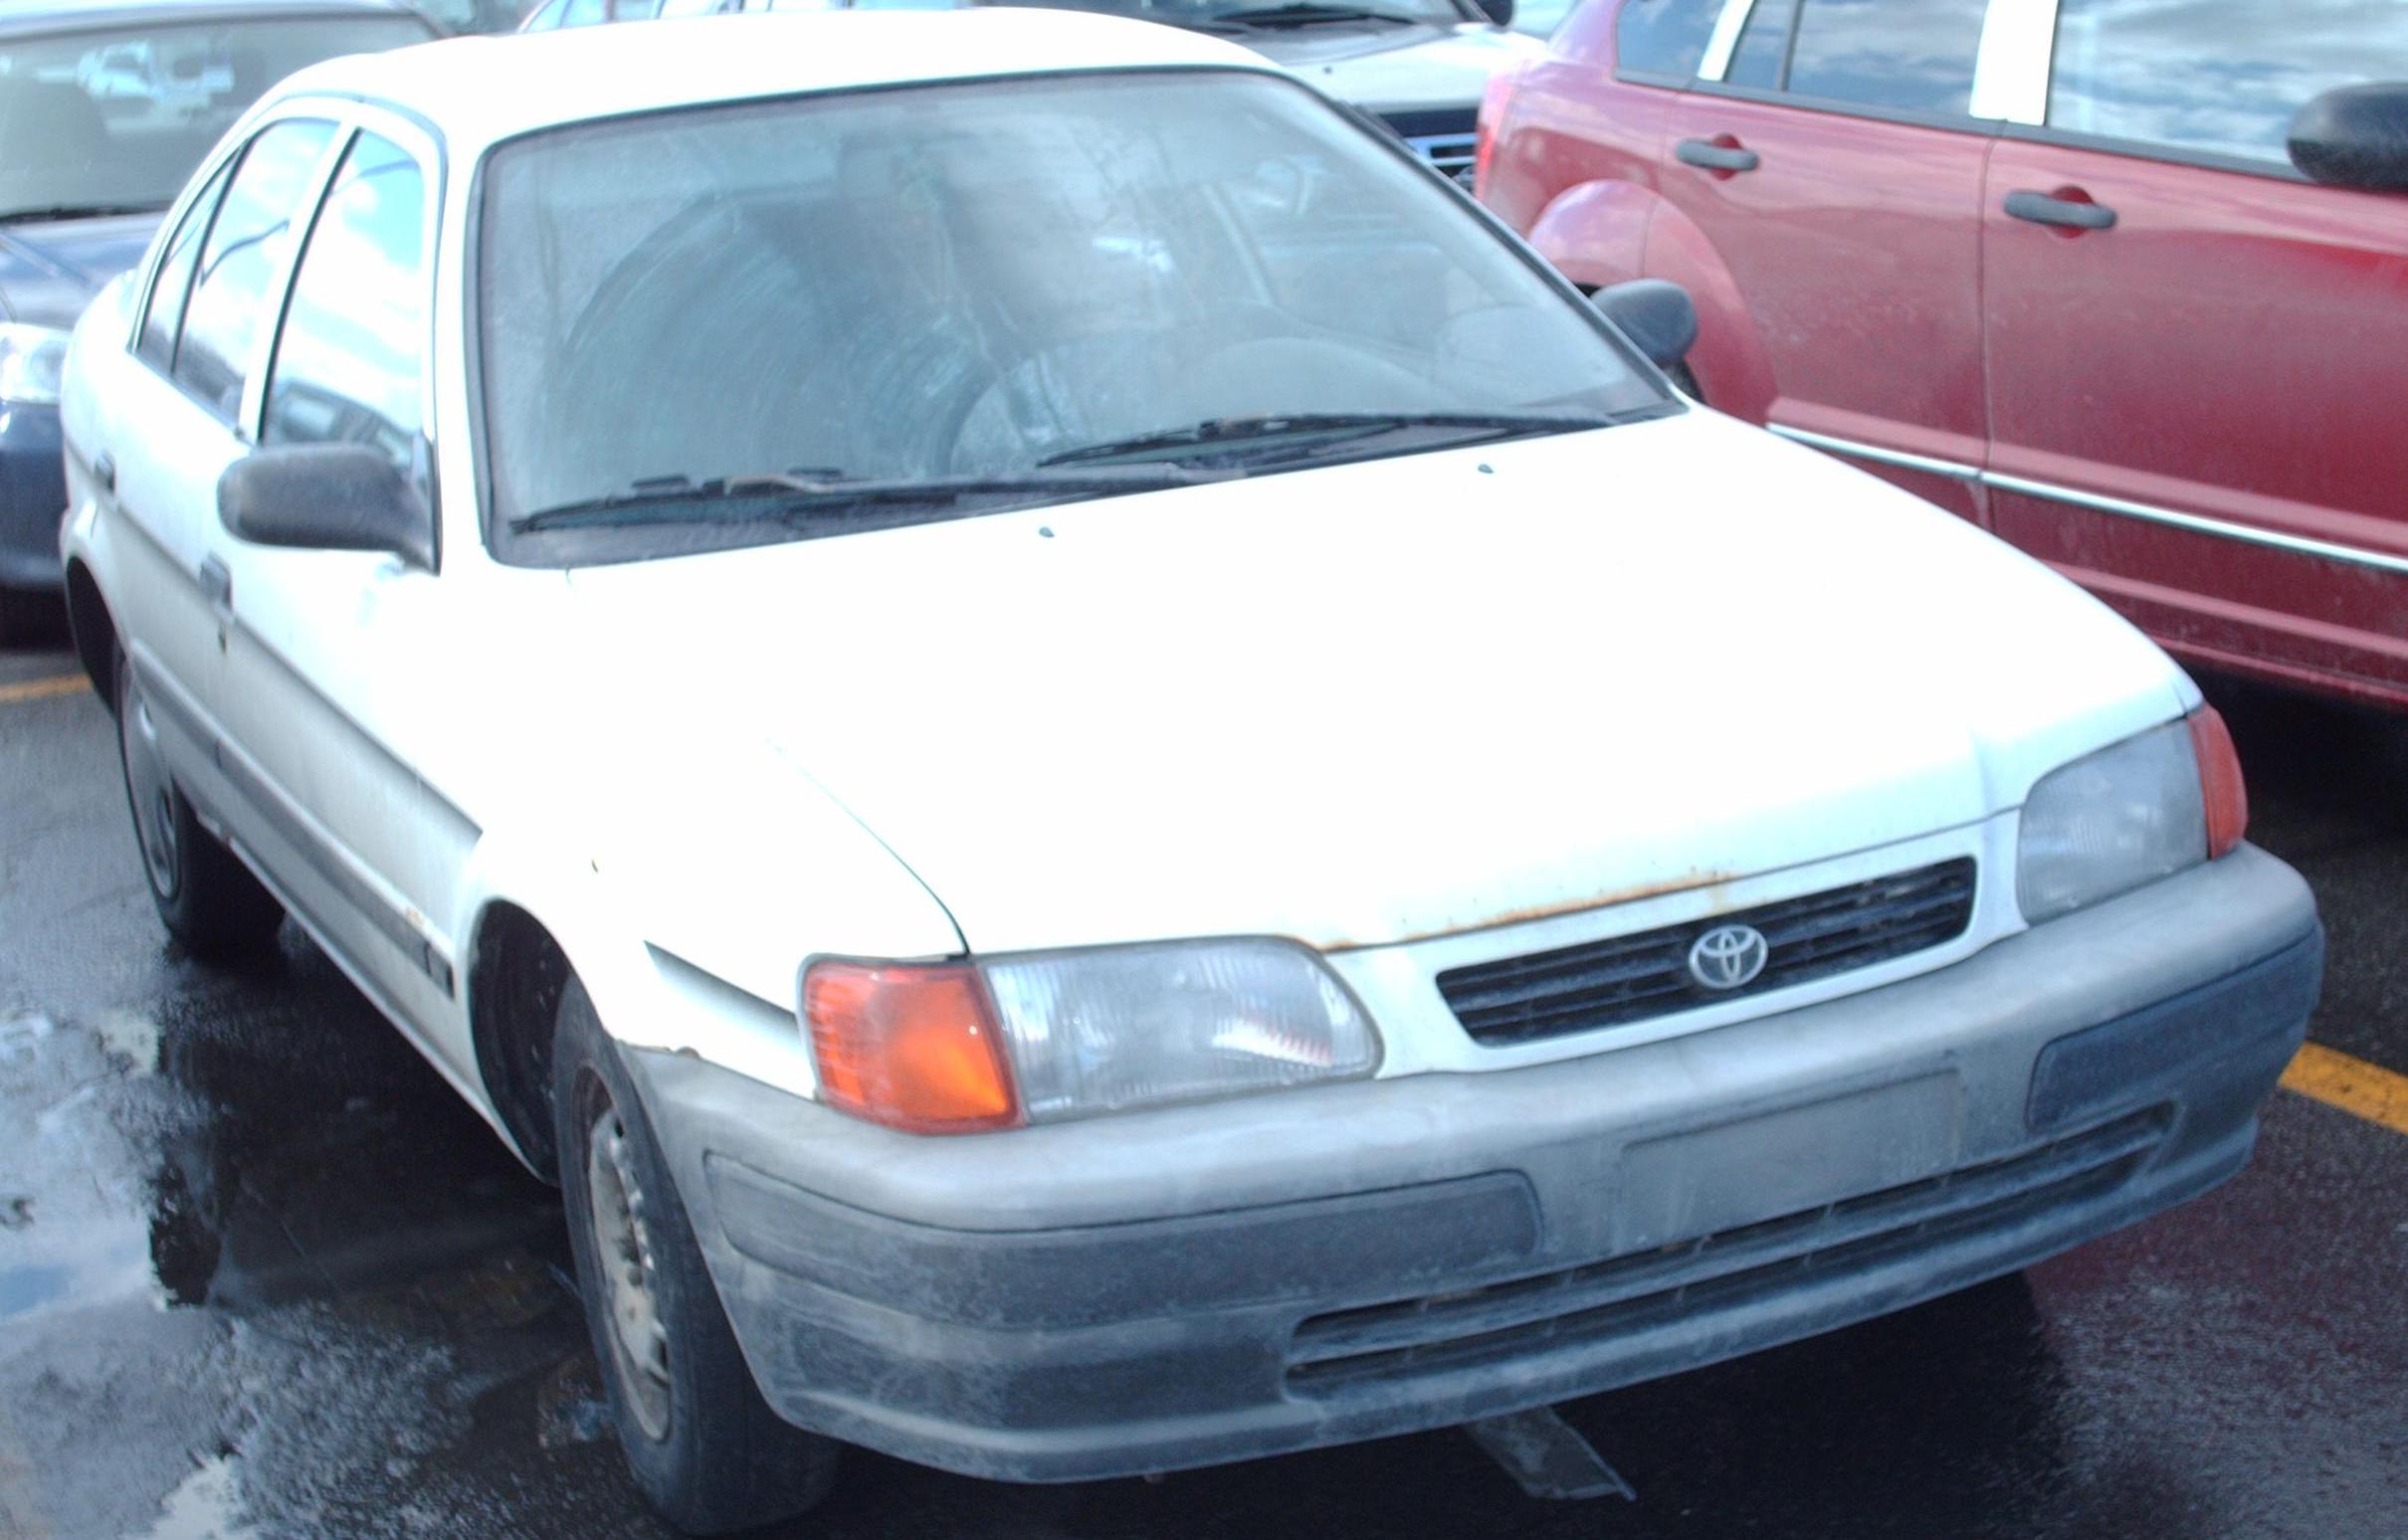 File:1995-97 Toyota Tercel Sedan.jpg - Wikimedia Commons